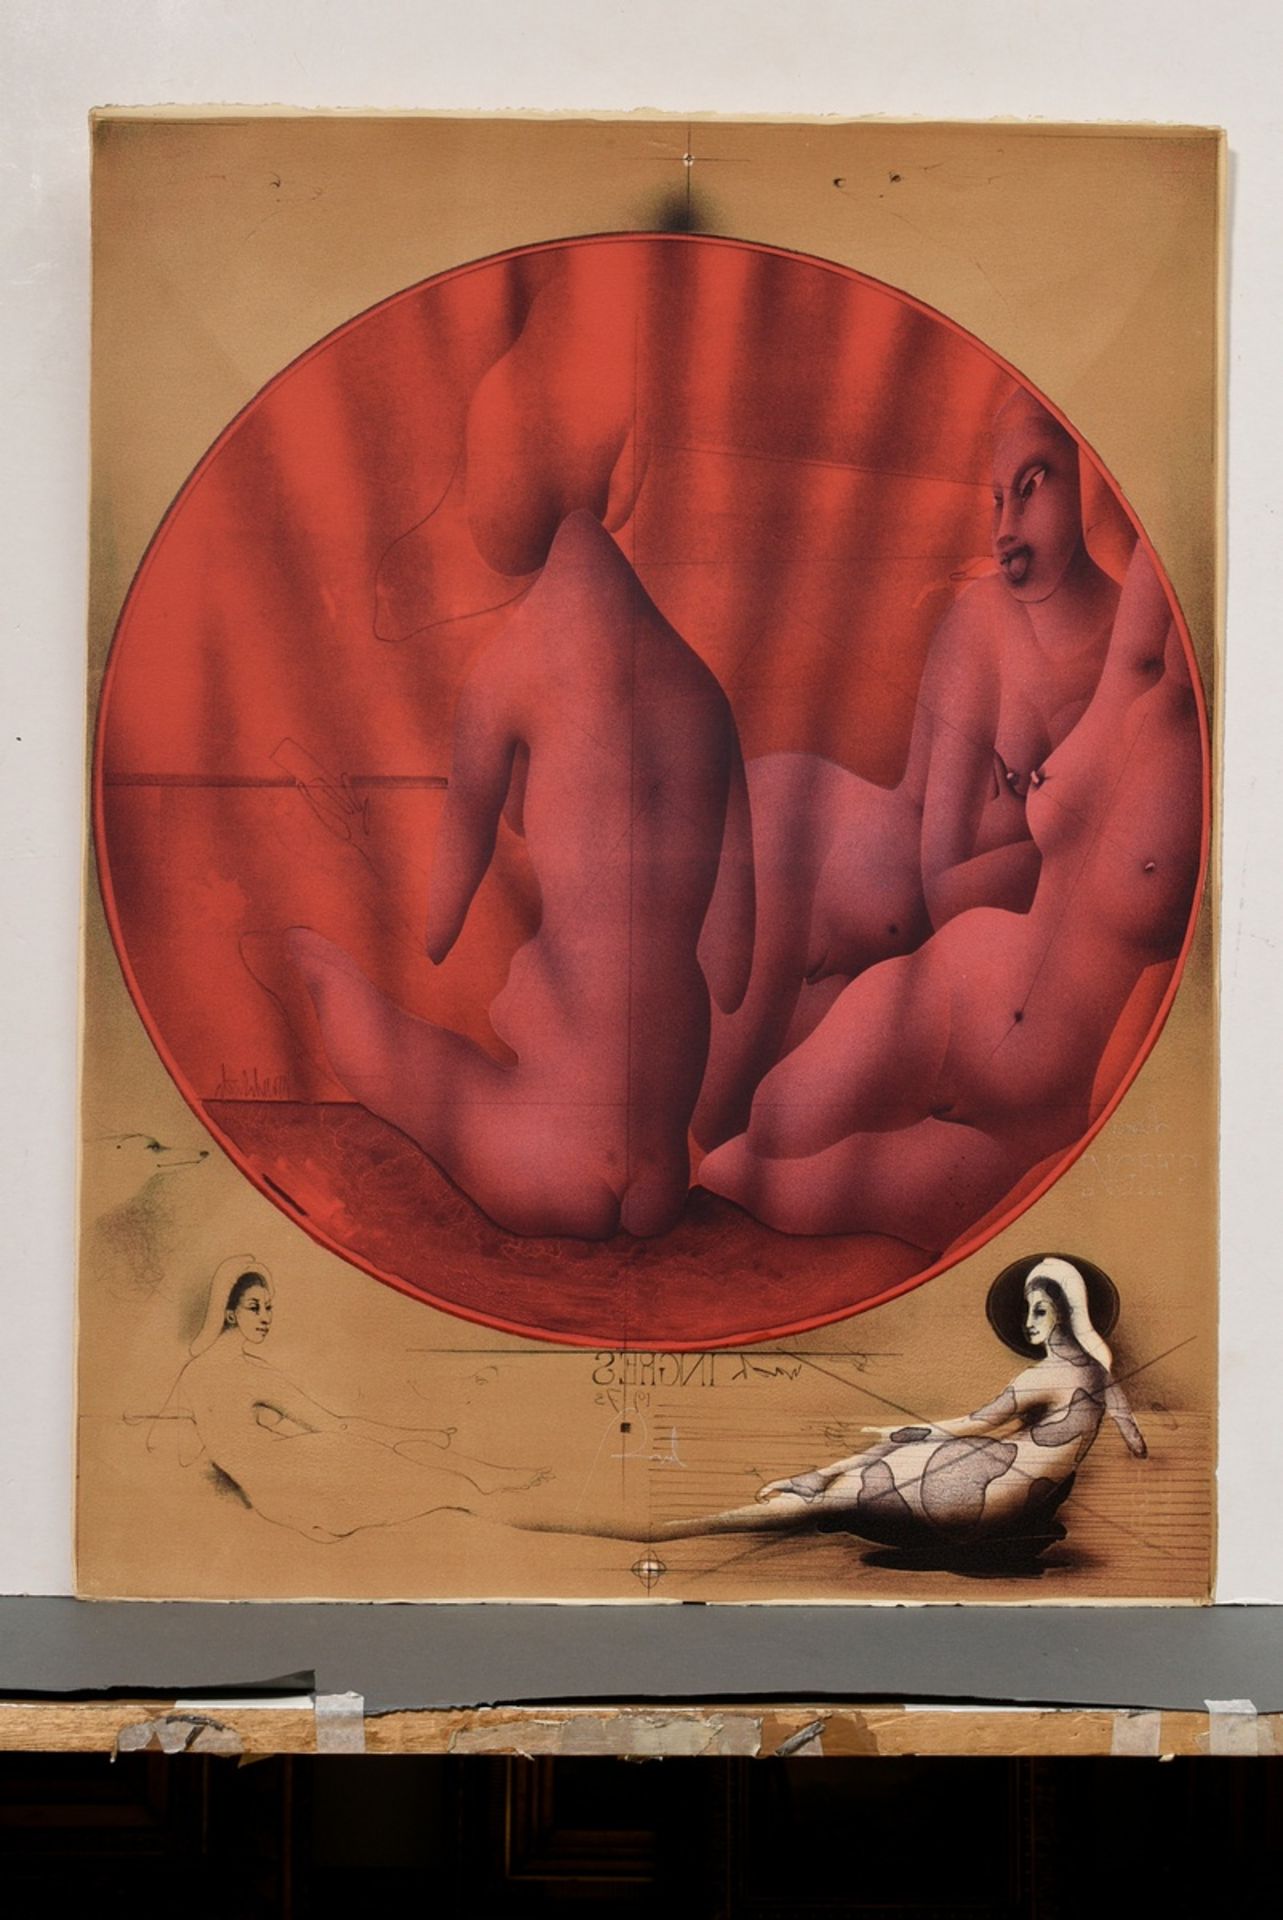 Wunderlich, Paul (1927-2010) ‘Le Bain Turc nach Ingres’ 1973, colour lithograph, b. sign. (Paul), i